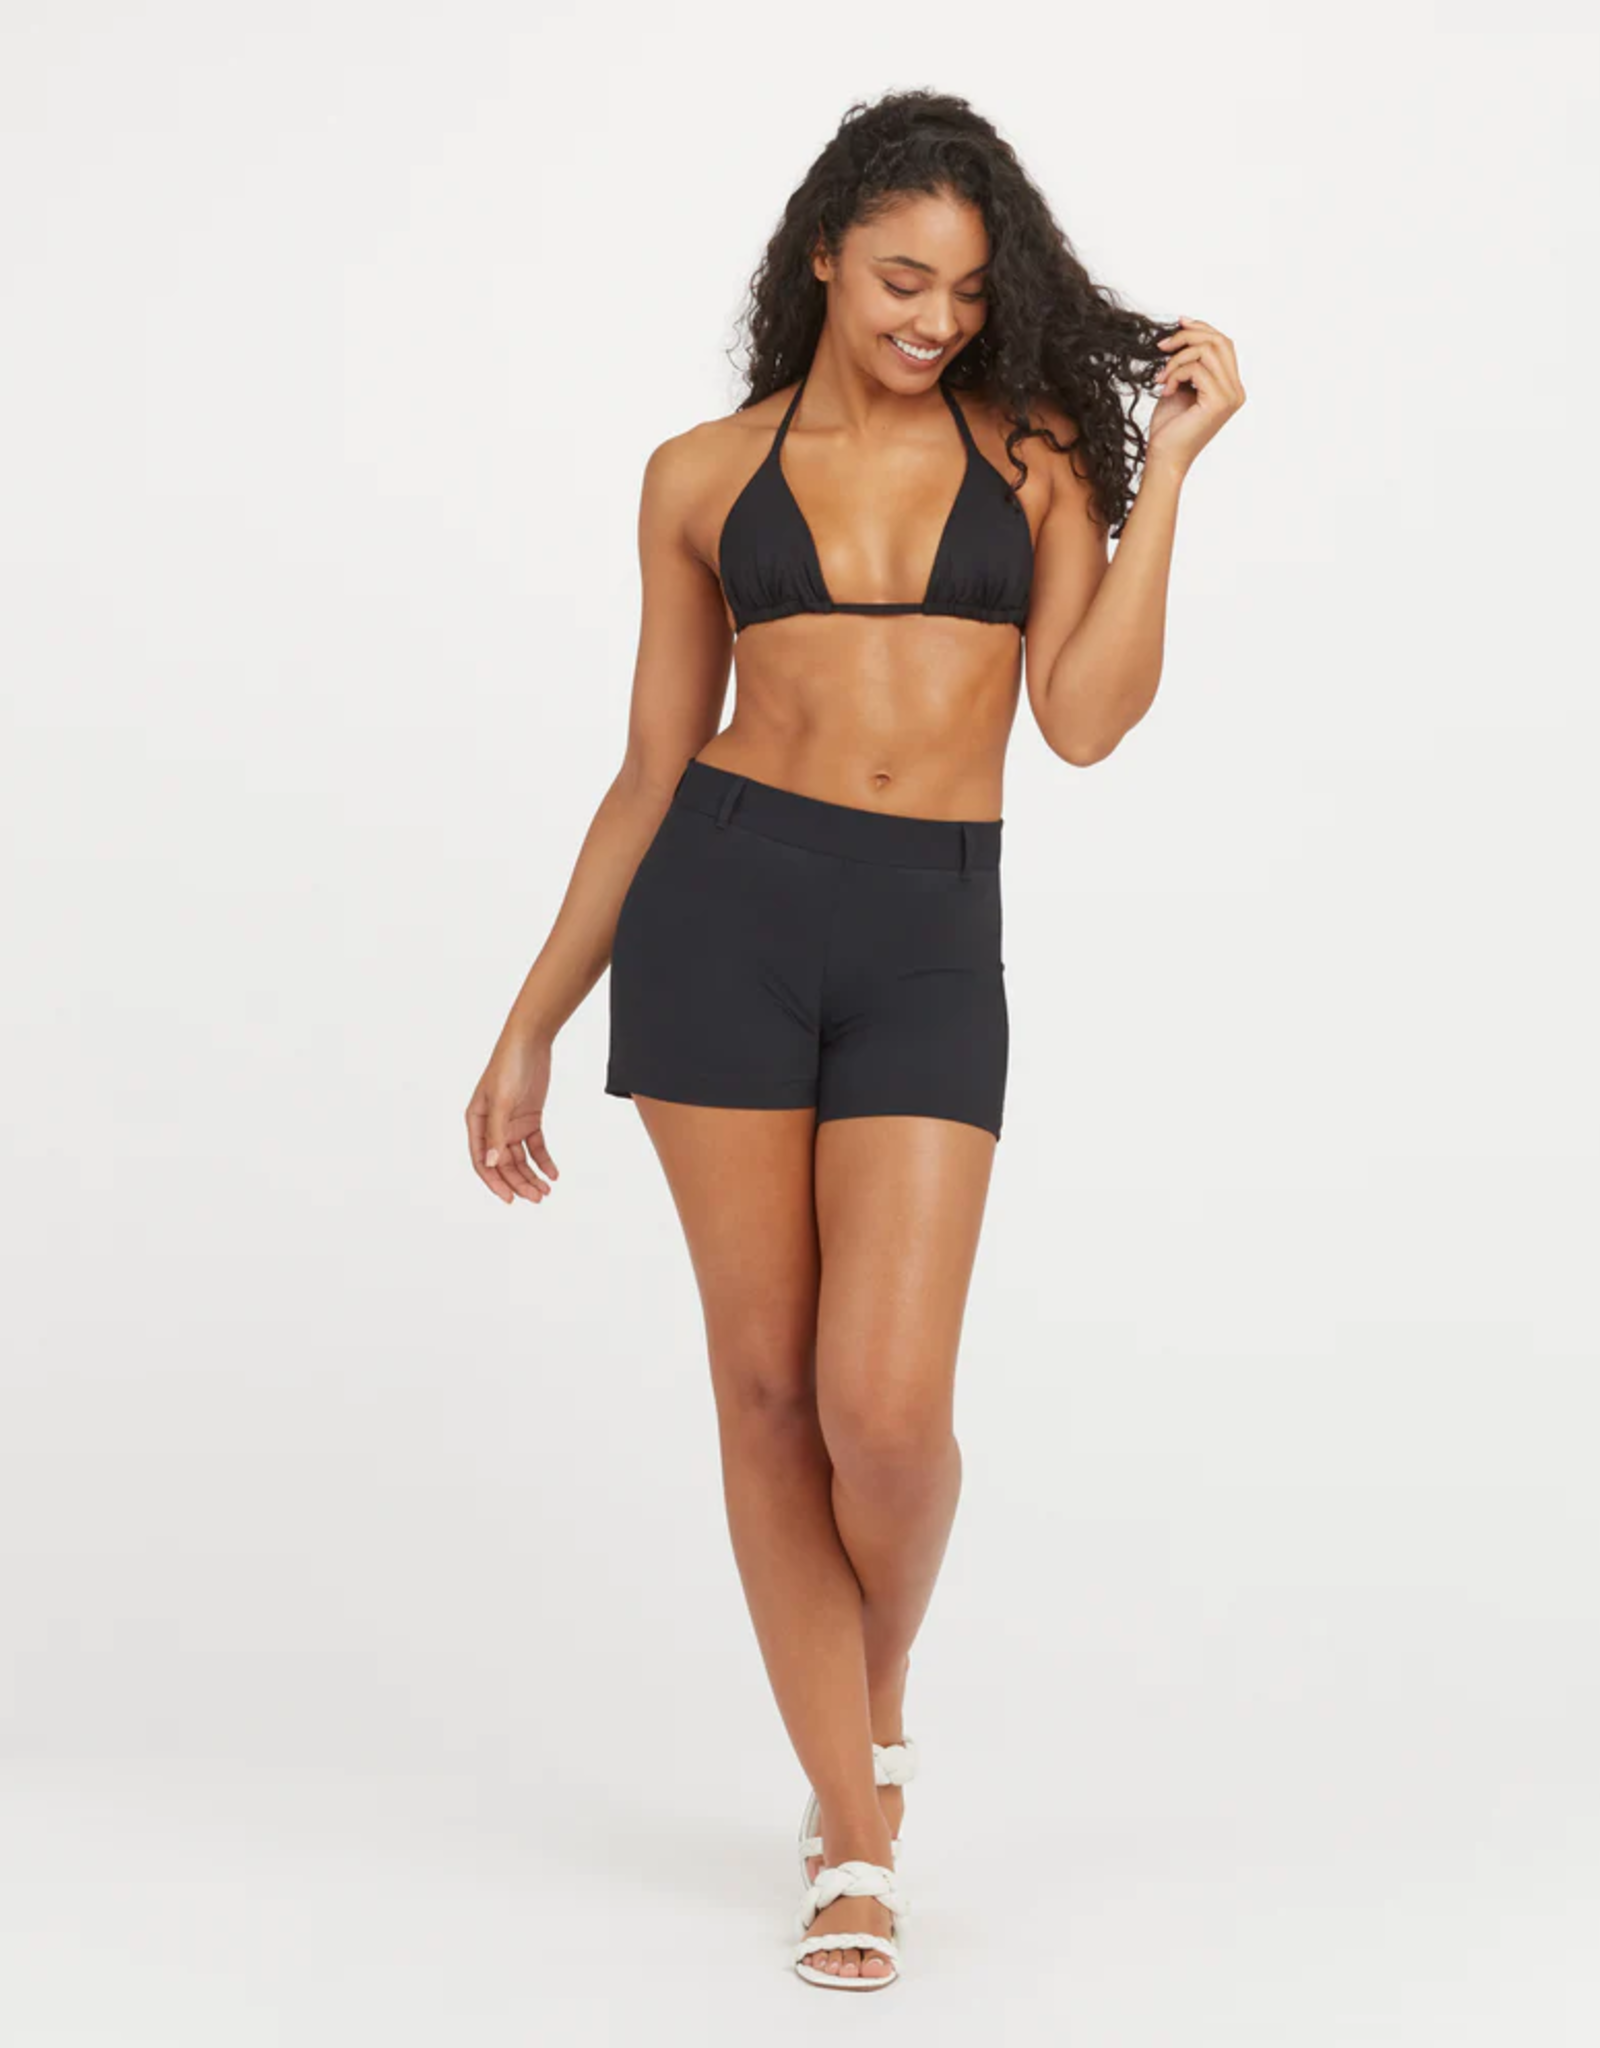 Spanx Sunshine Shorts 4” Pull On 4-Way Stretch Size L Large Black Camo NWT